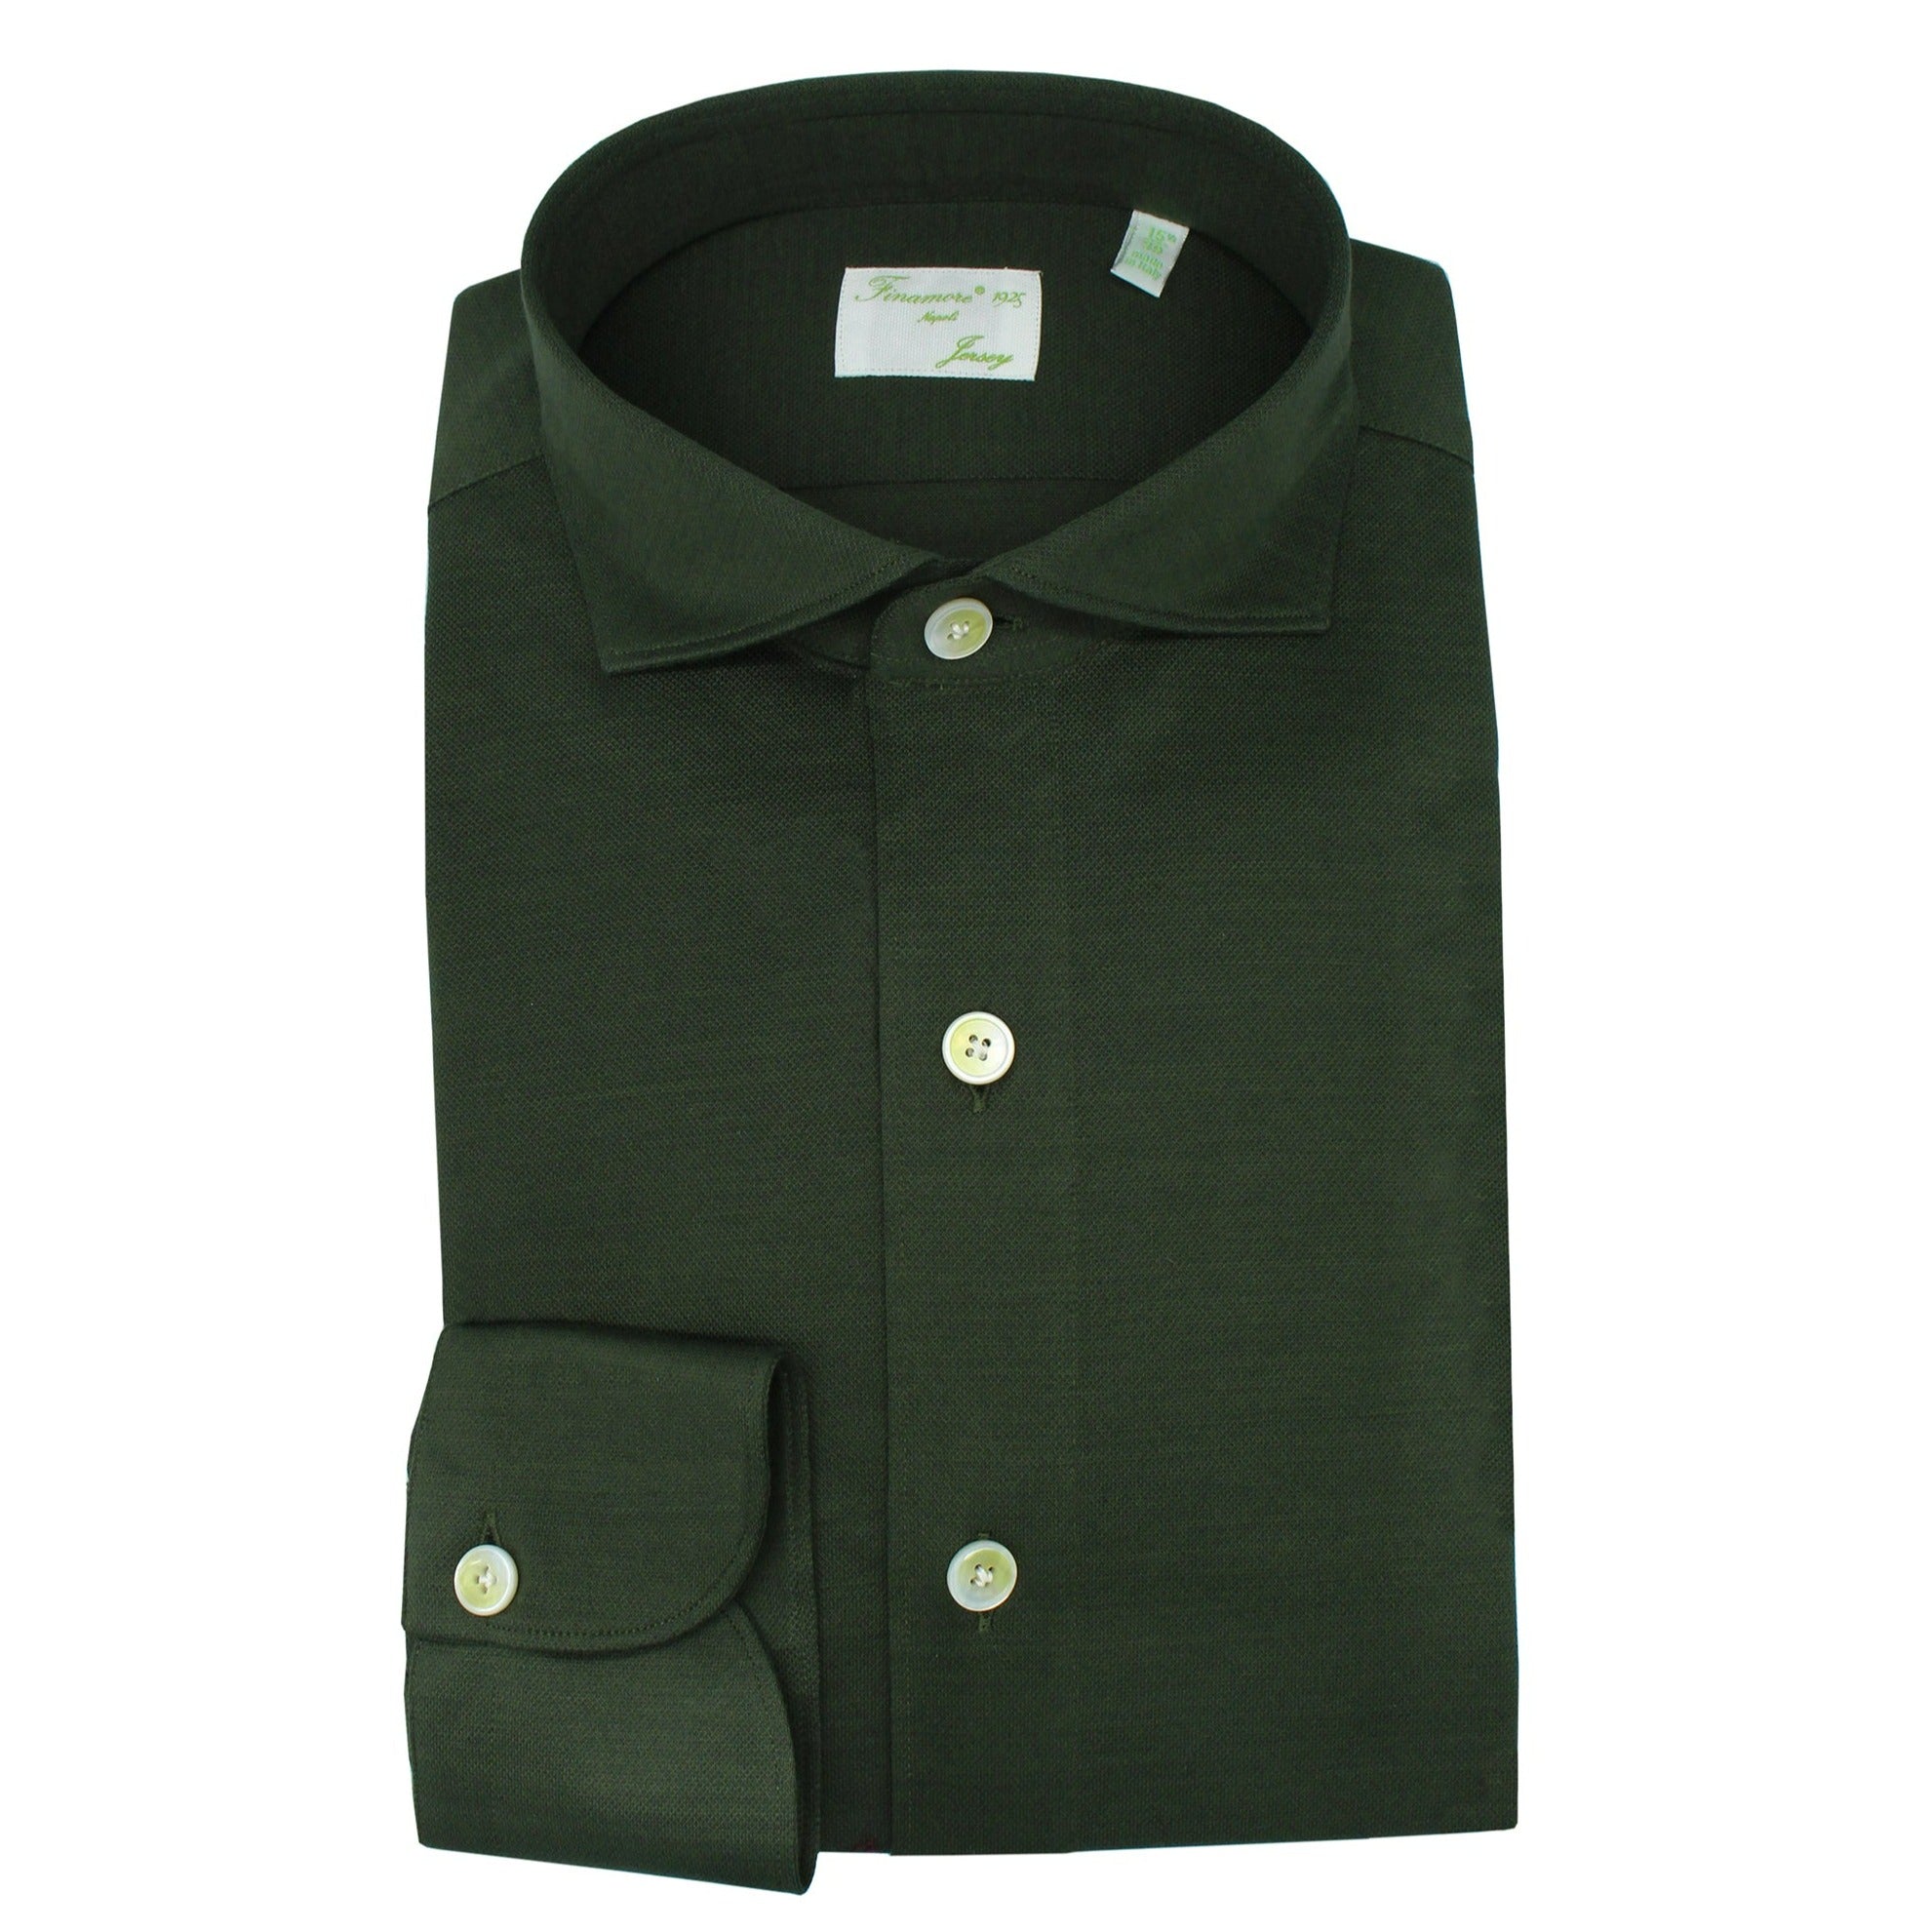 Toronto cotton jersey green slim fit shirt